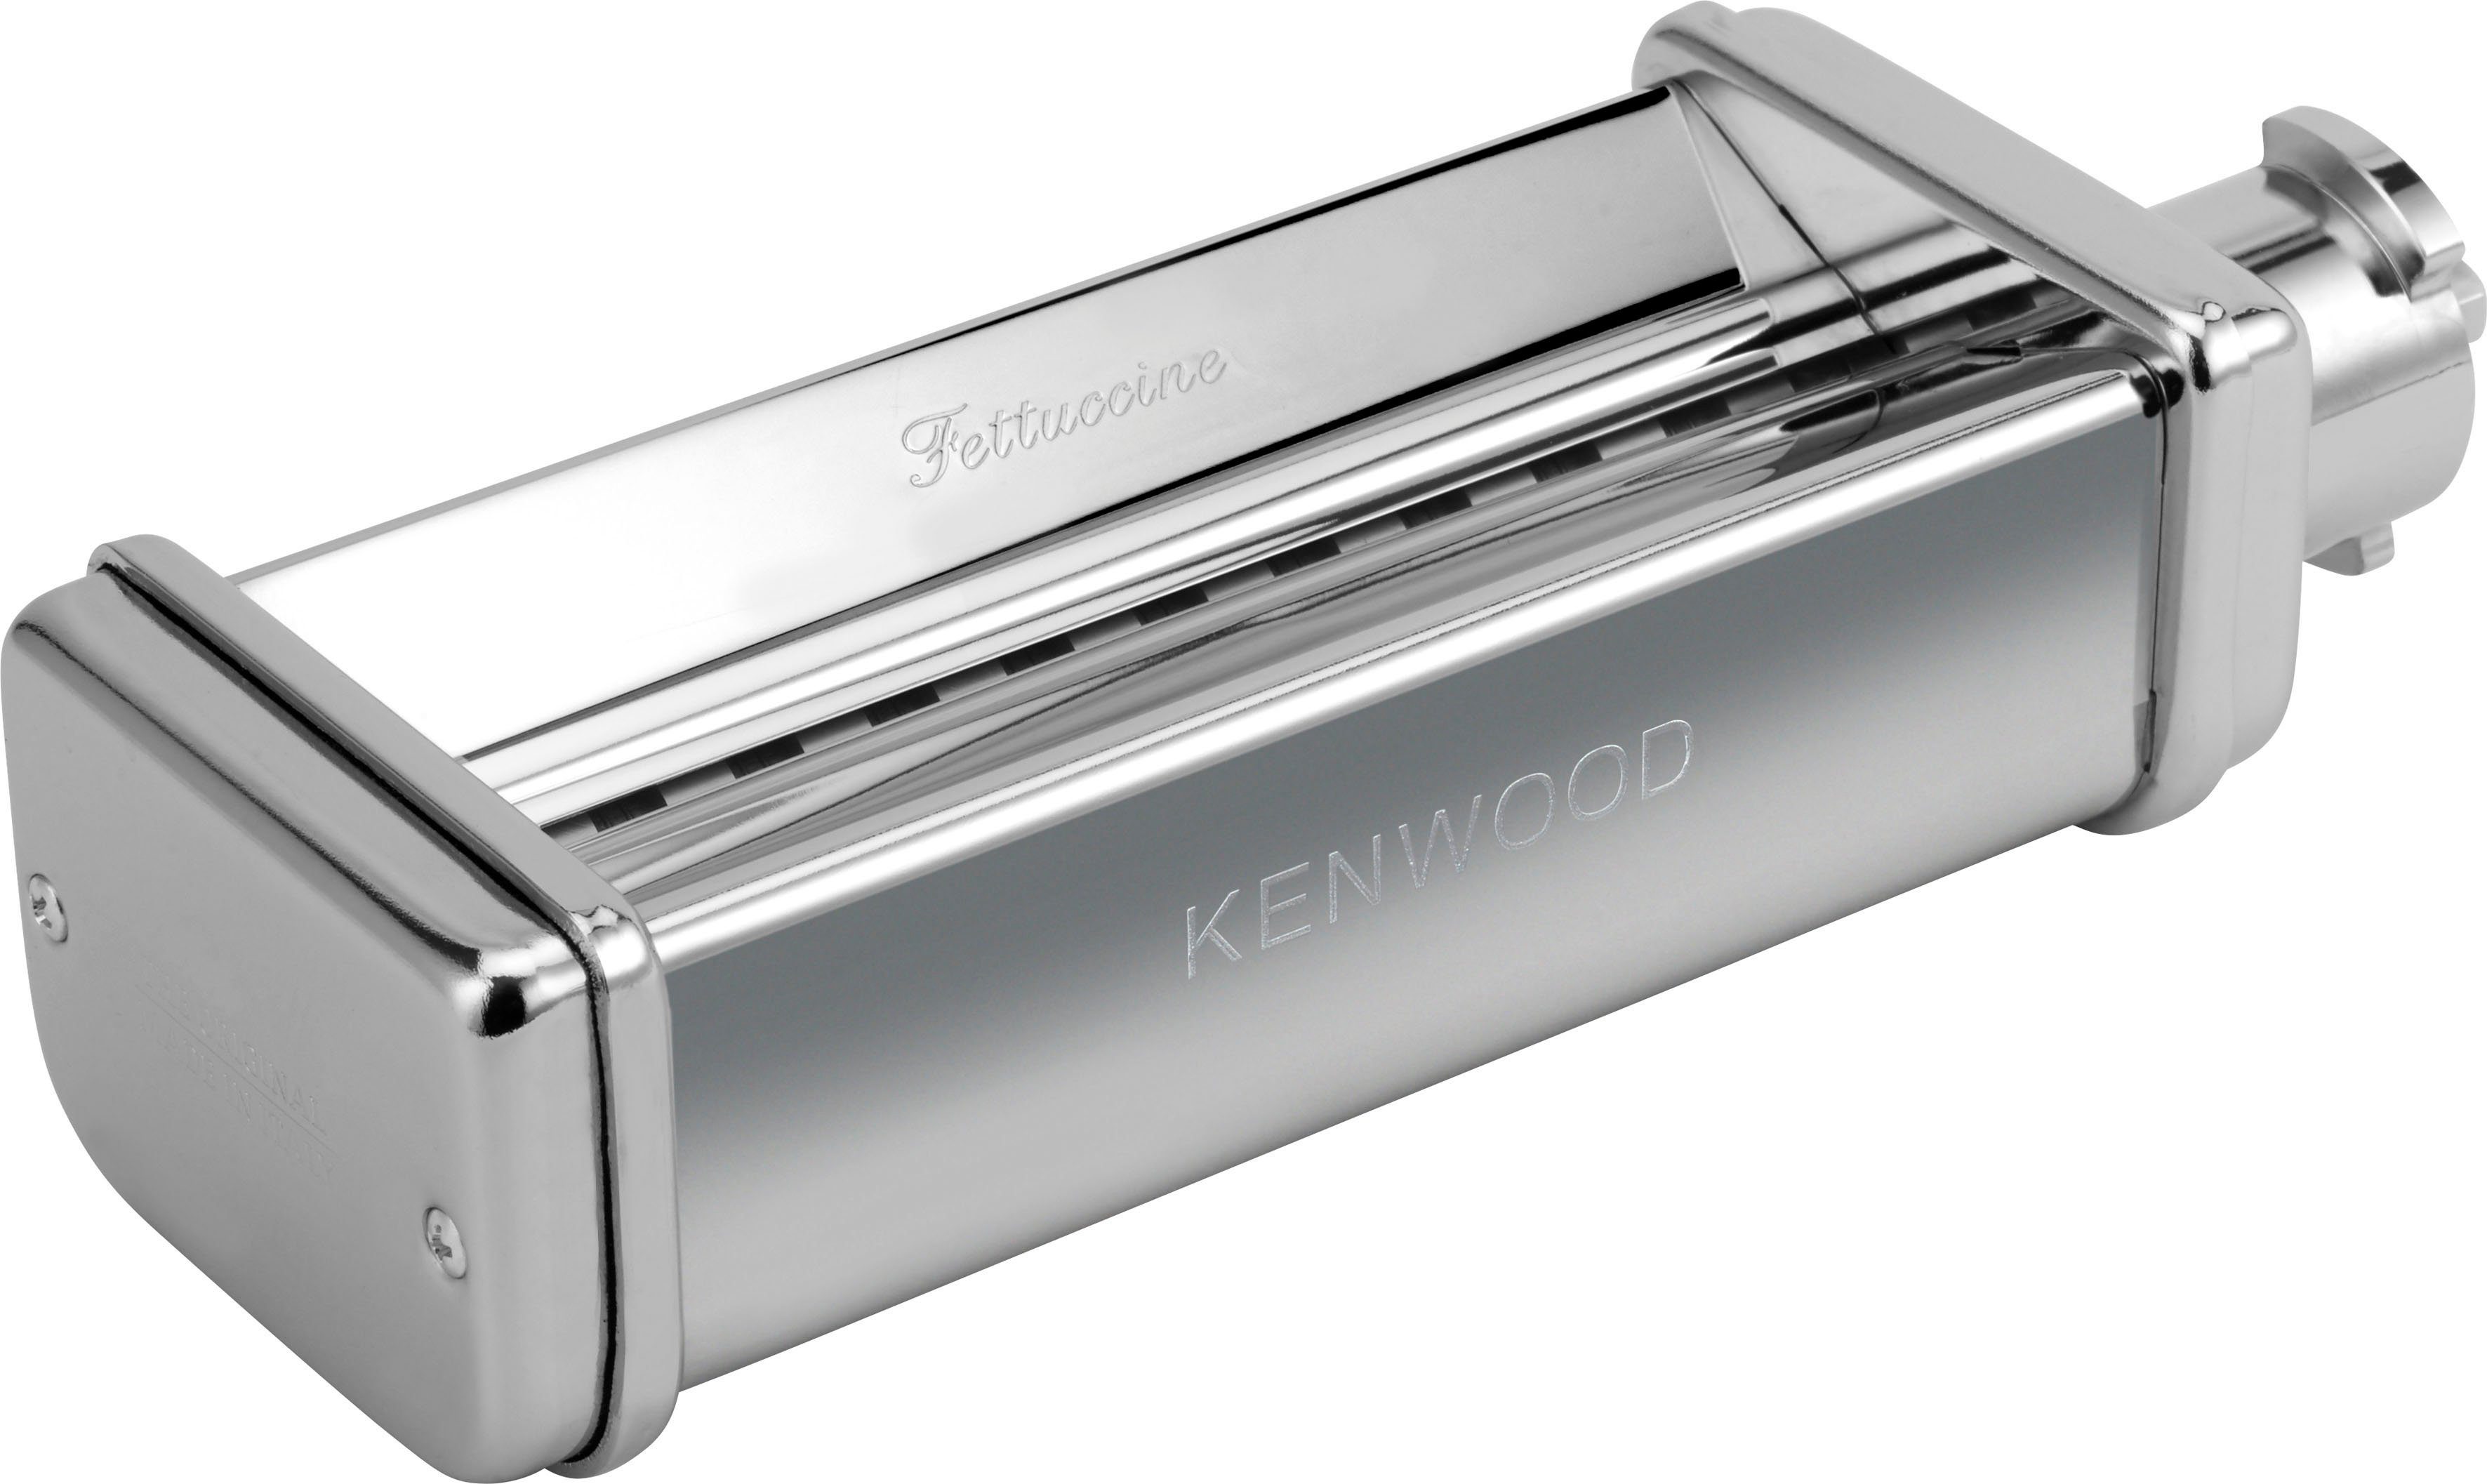 Kenwood pastawals fettuccine snij-inzet KAX981ME, accessoire voor Kenwood-keukenmachines